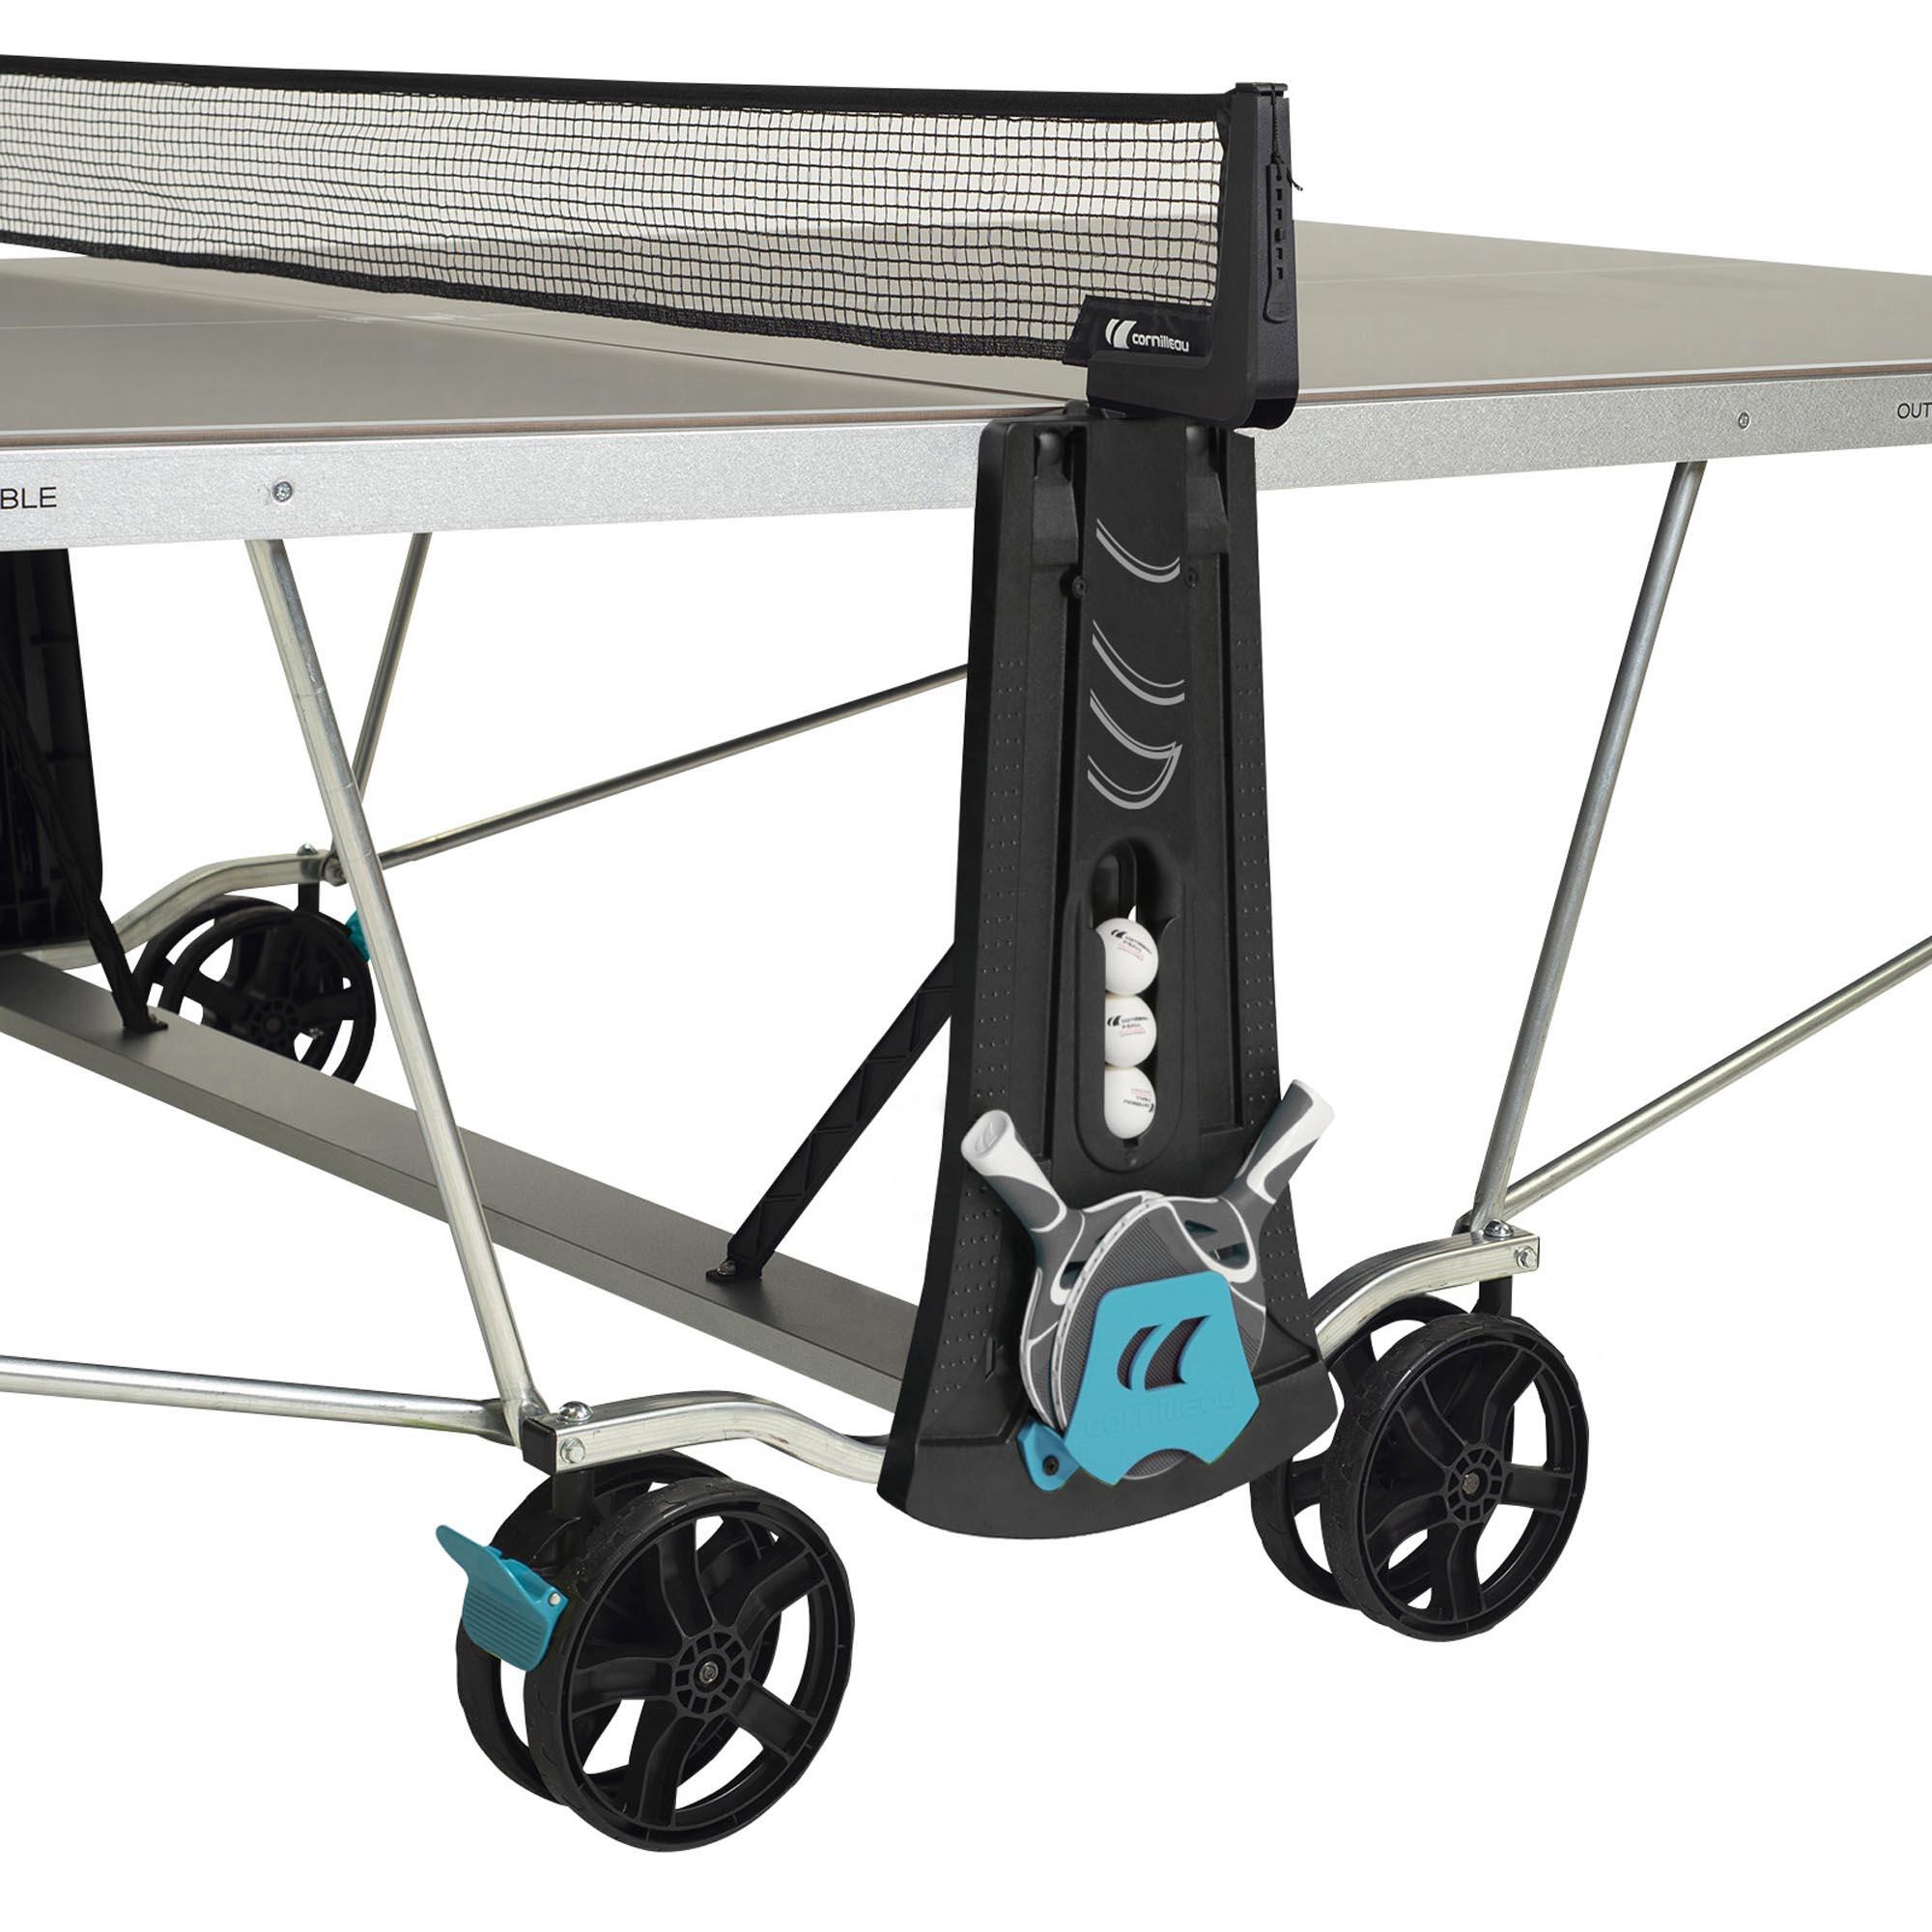 Outdoor Table Tennis Table 300X - Grey 5/20